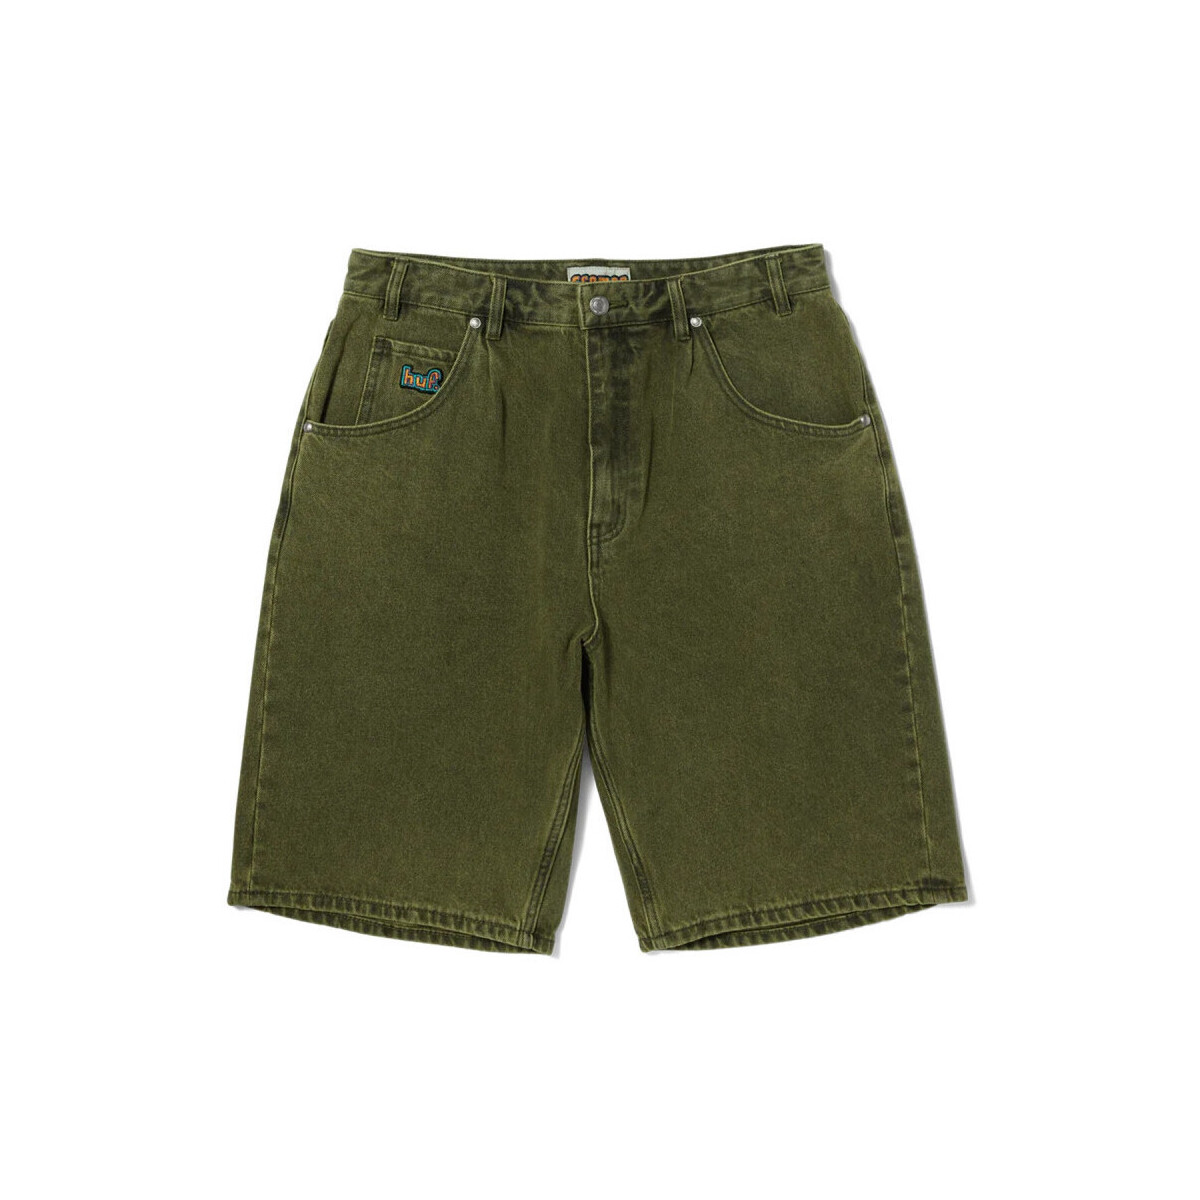 Textil Core Shorts / Bermudas Huf Short cromer dried Verde